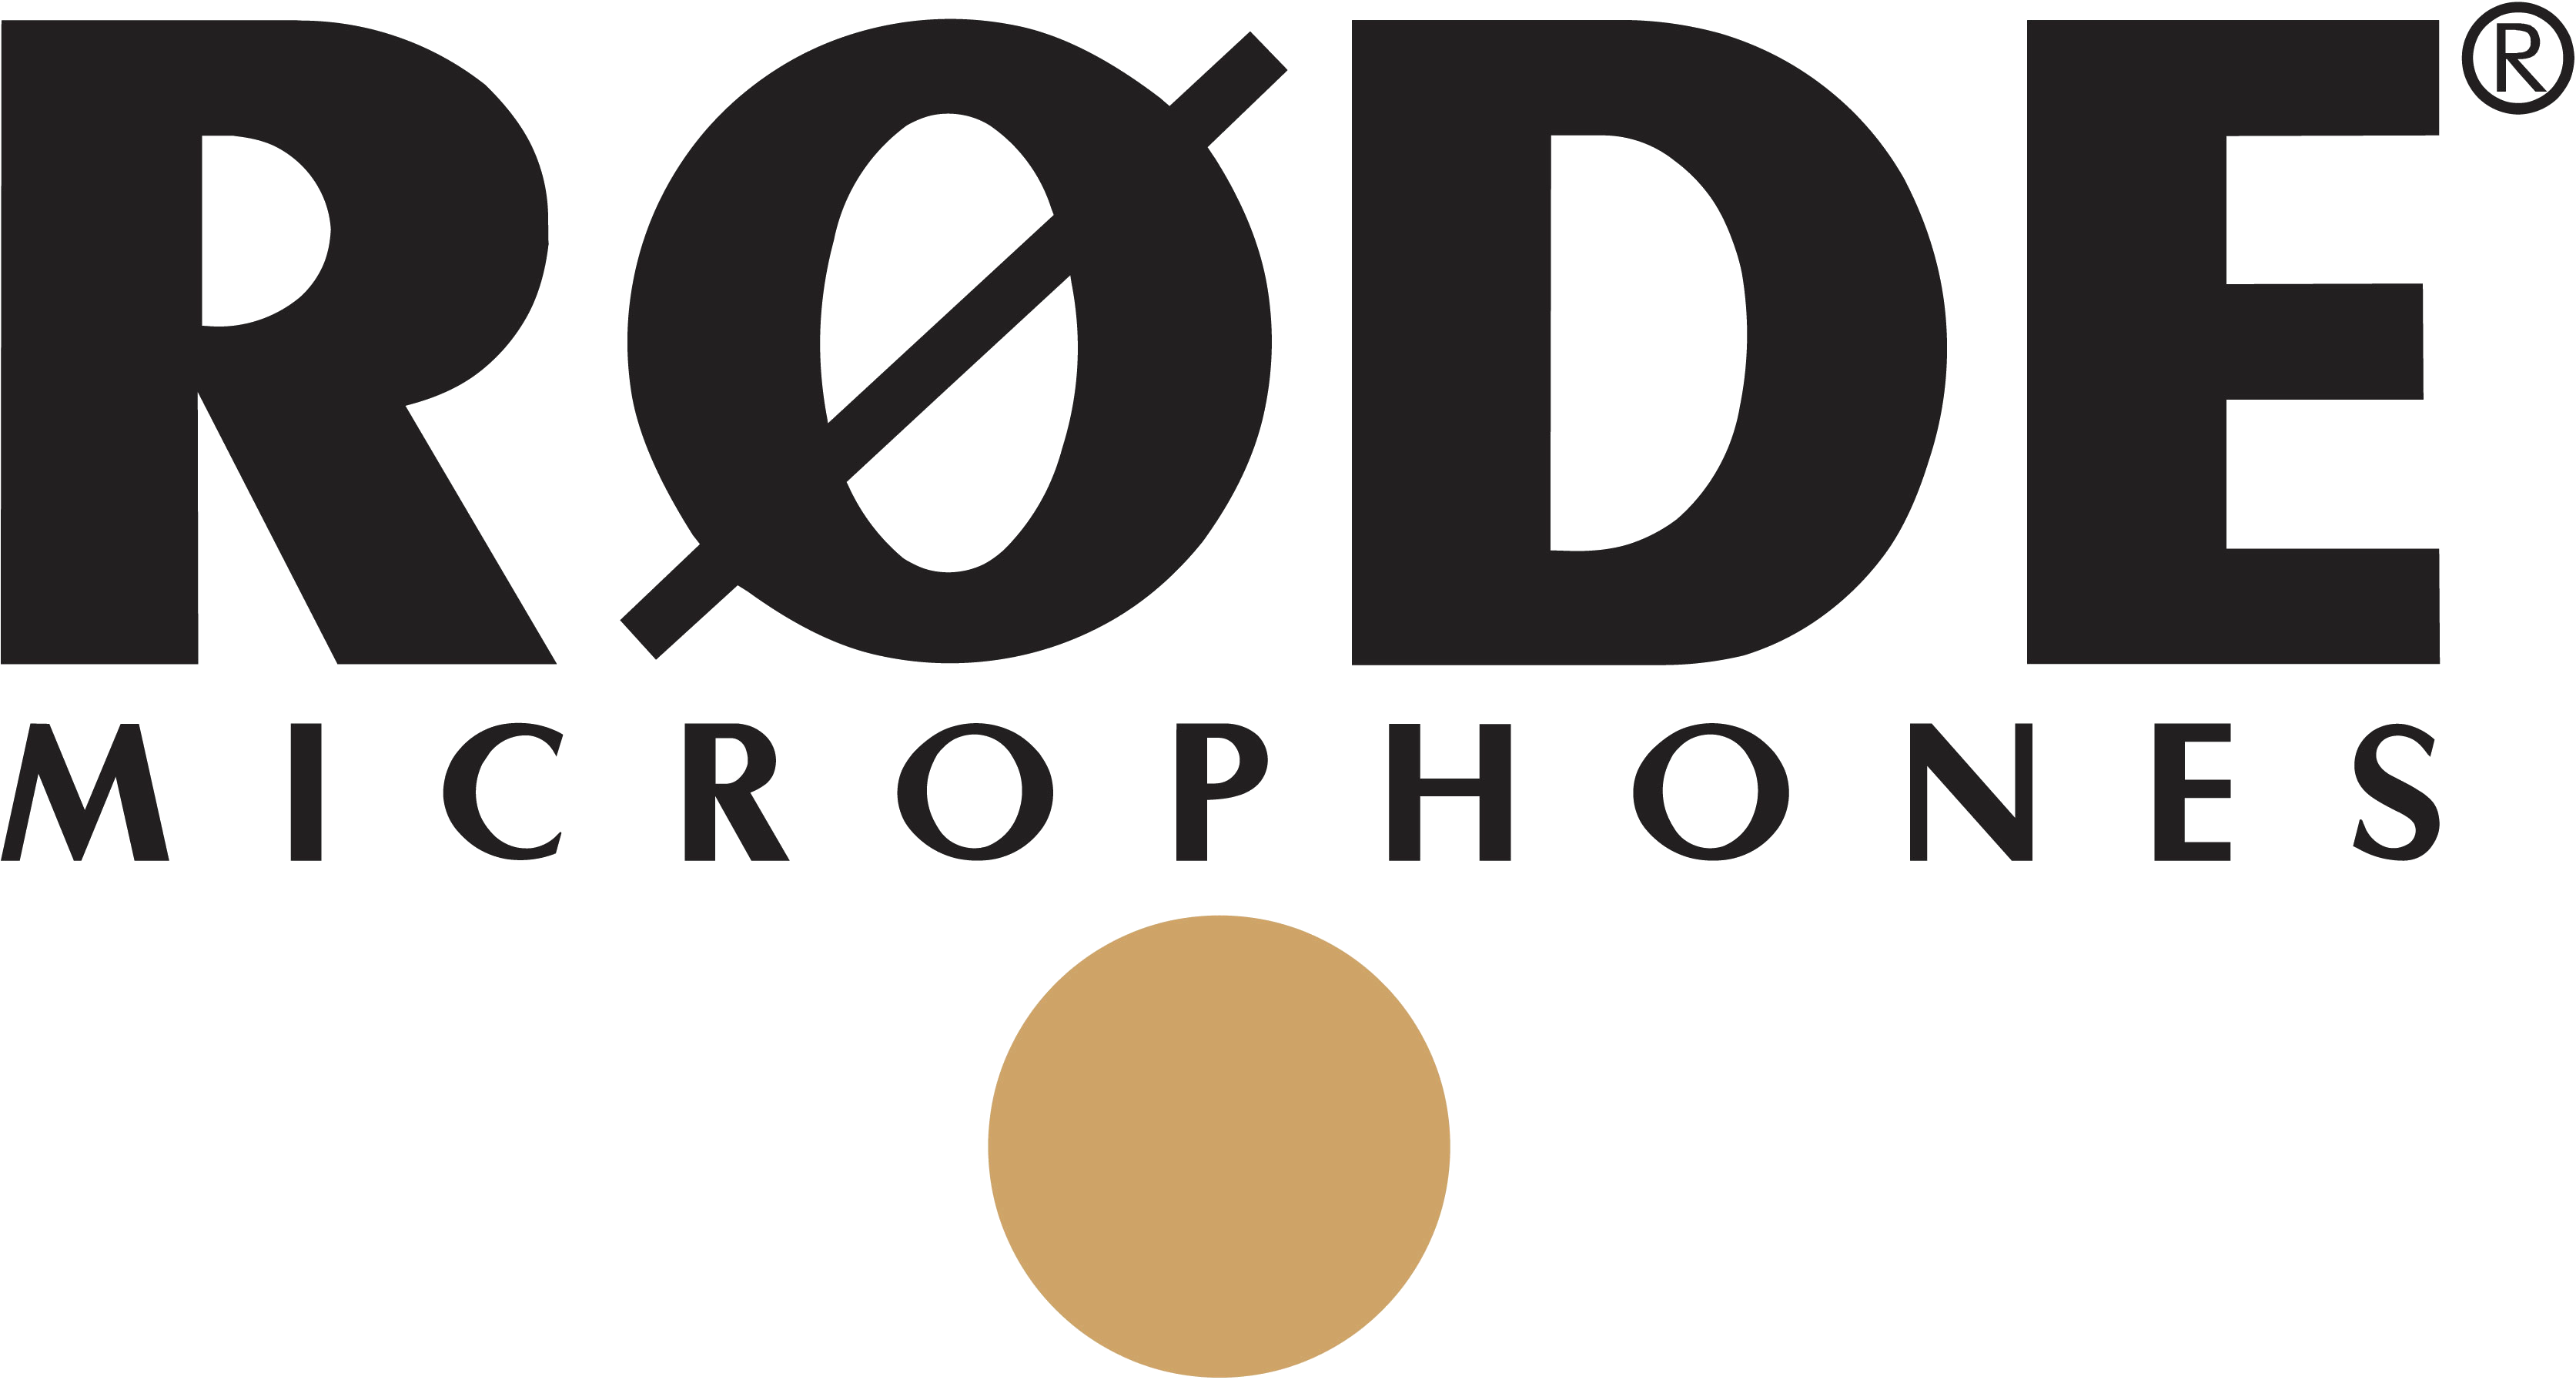 Rode_Logo.png (294 KB)